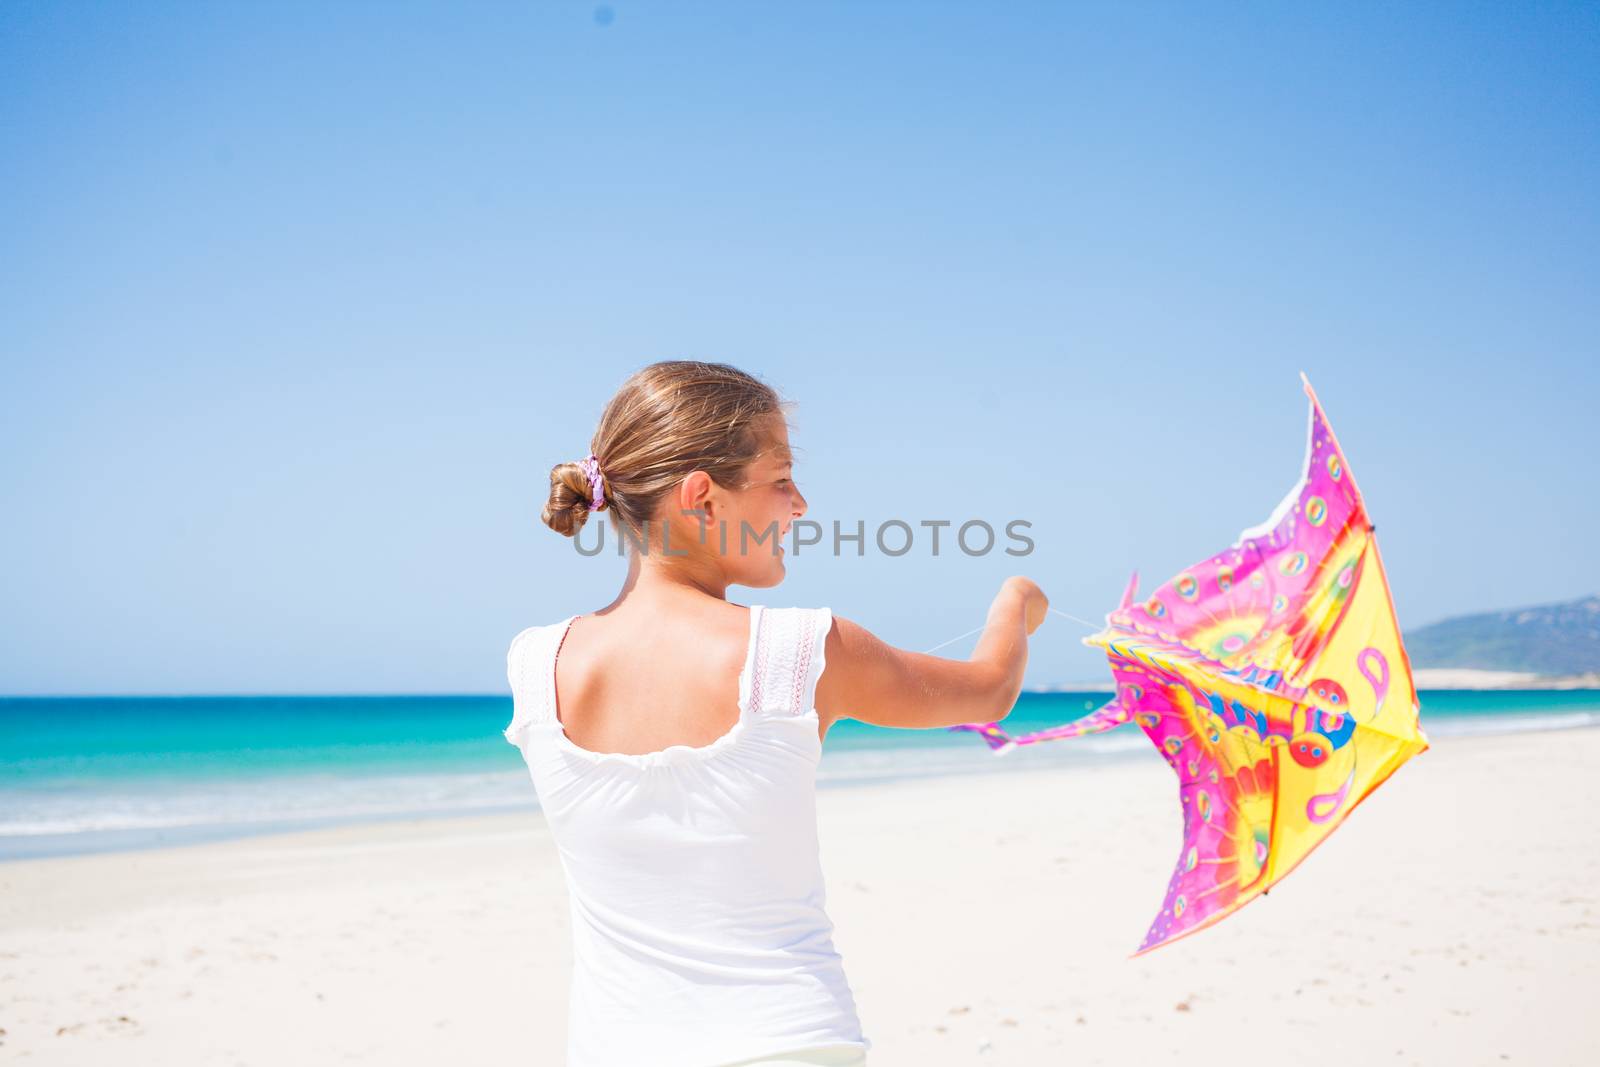 Beach cute girl kite flying outdoor coast ocean